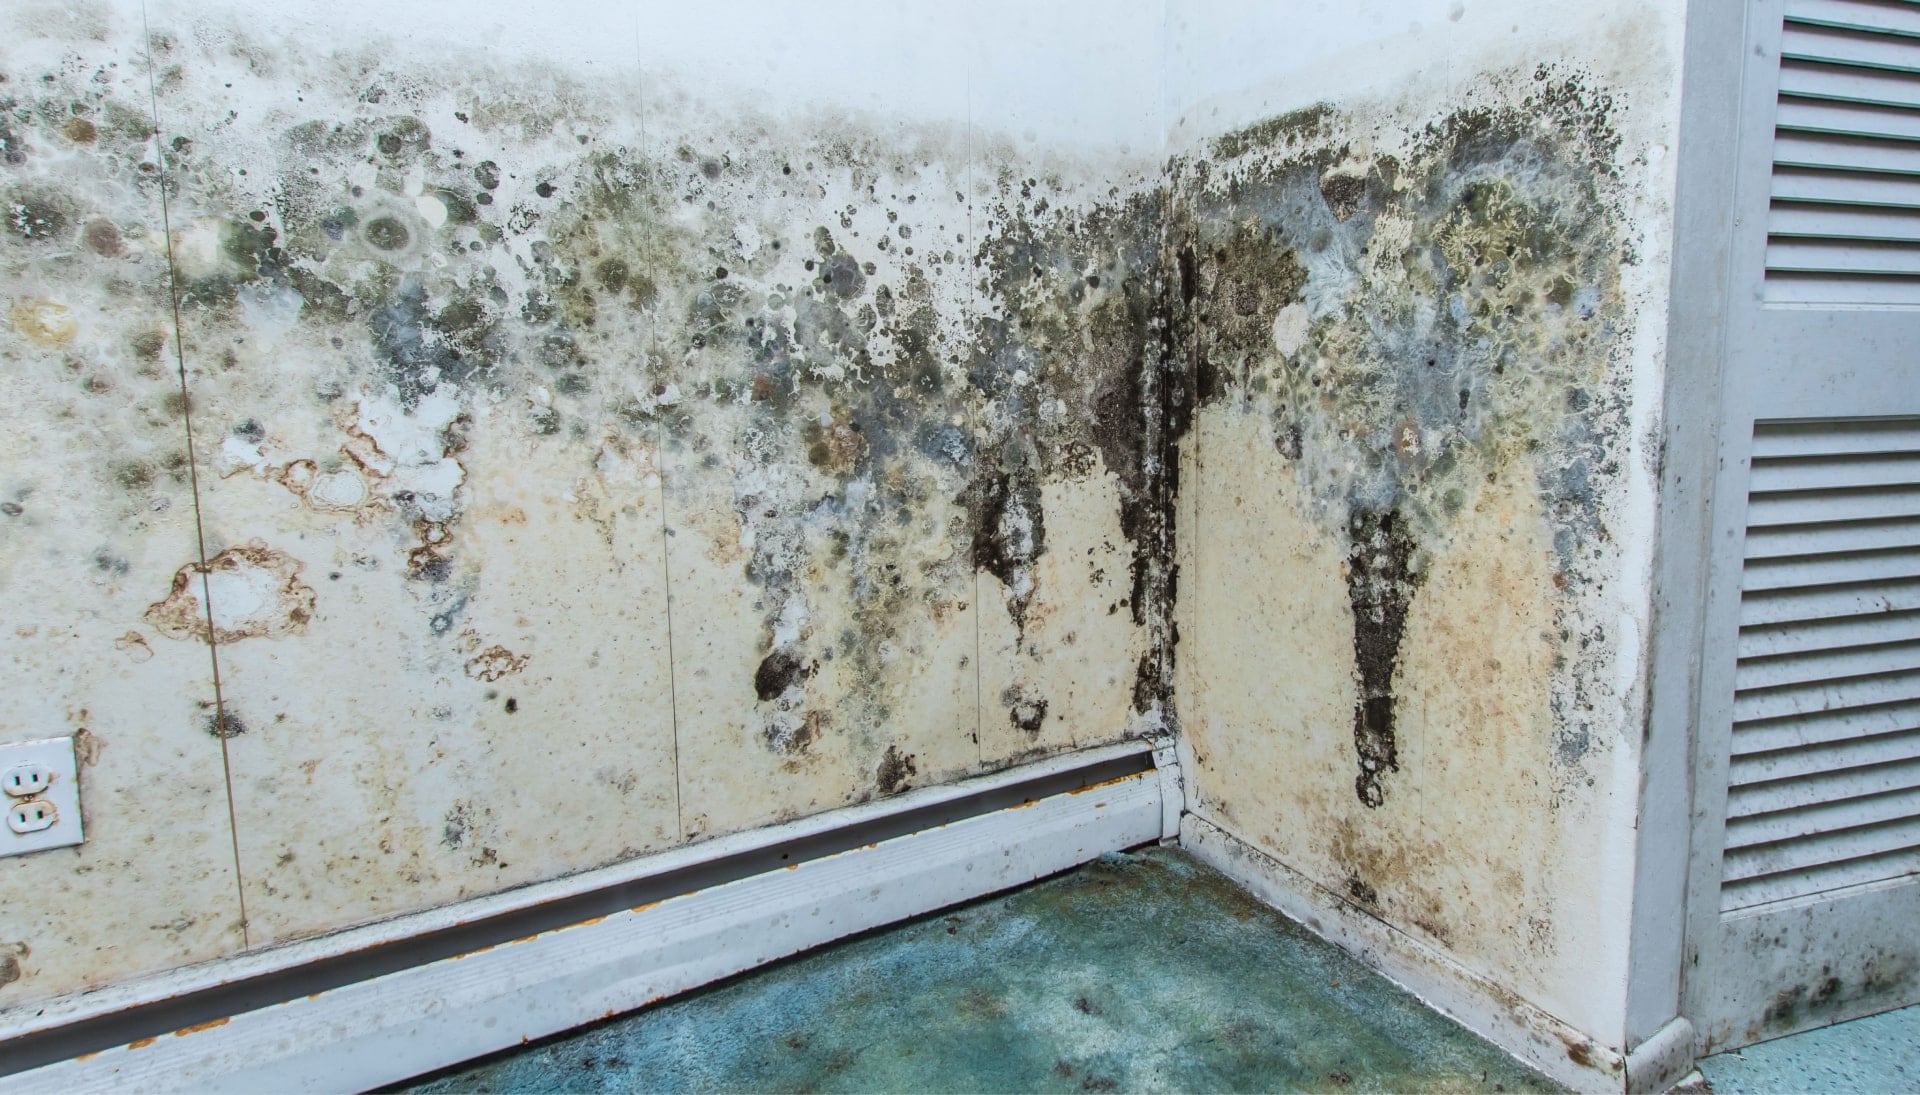 Professional mold removal, odor control, and water damage restoration service in Brunswick, North Carolina.